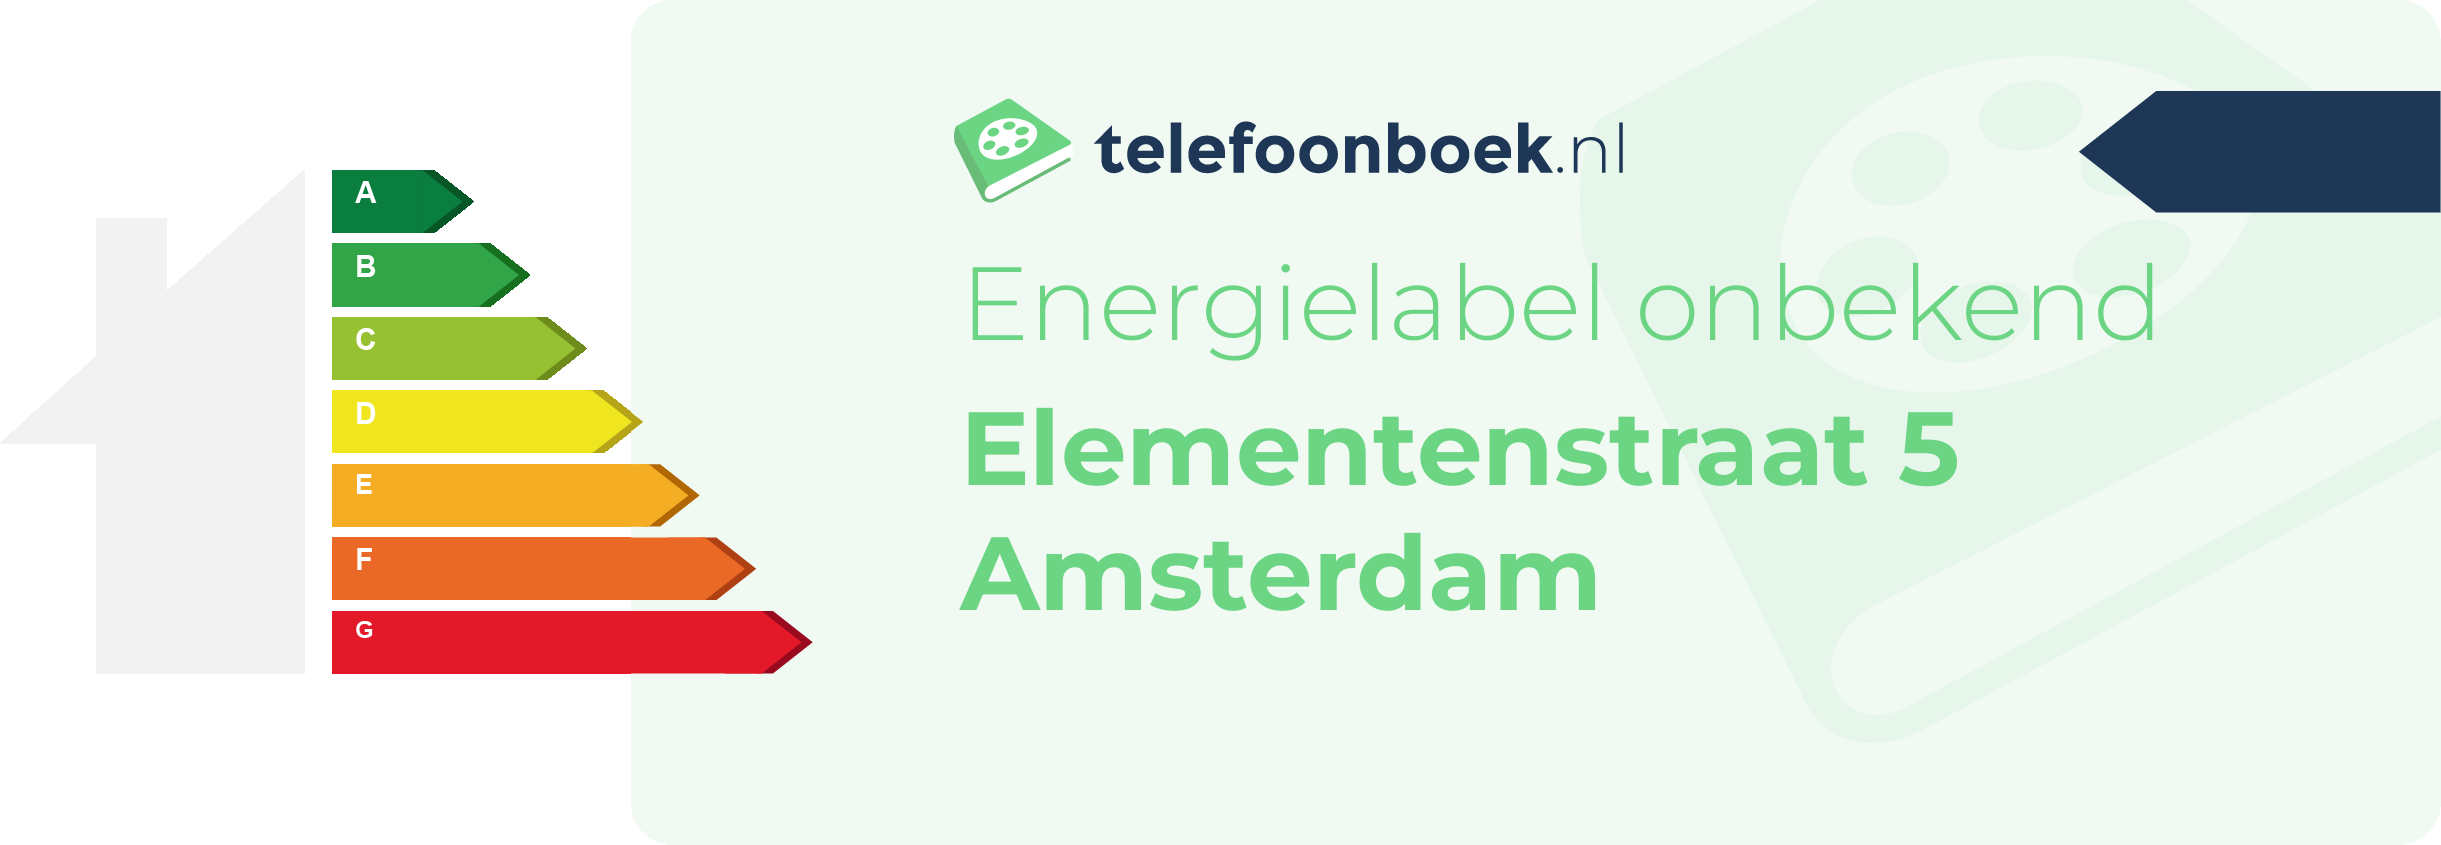 Energielabel Elementenstraat 5 Amsterdam